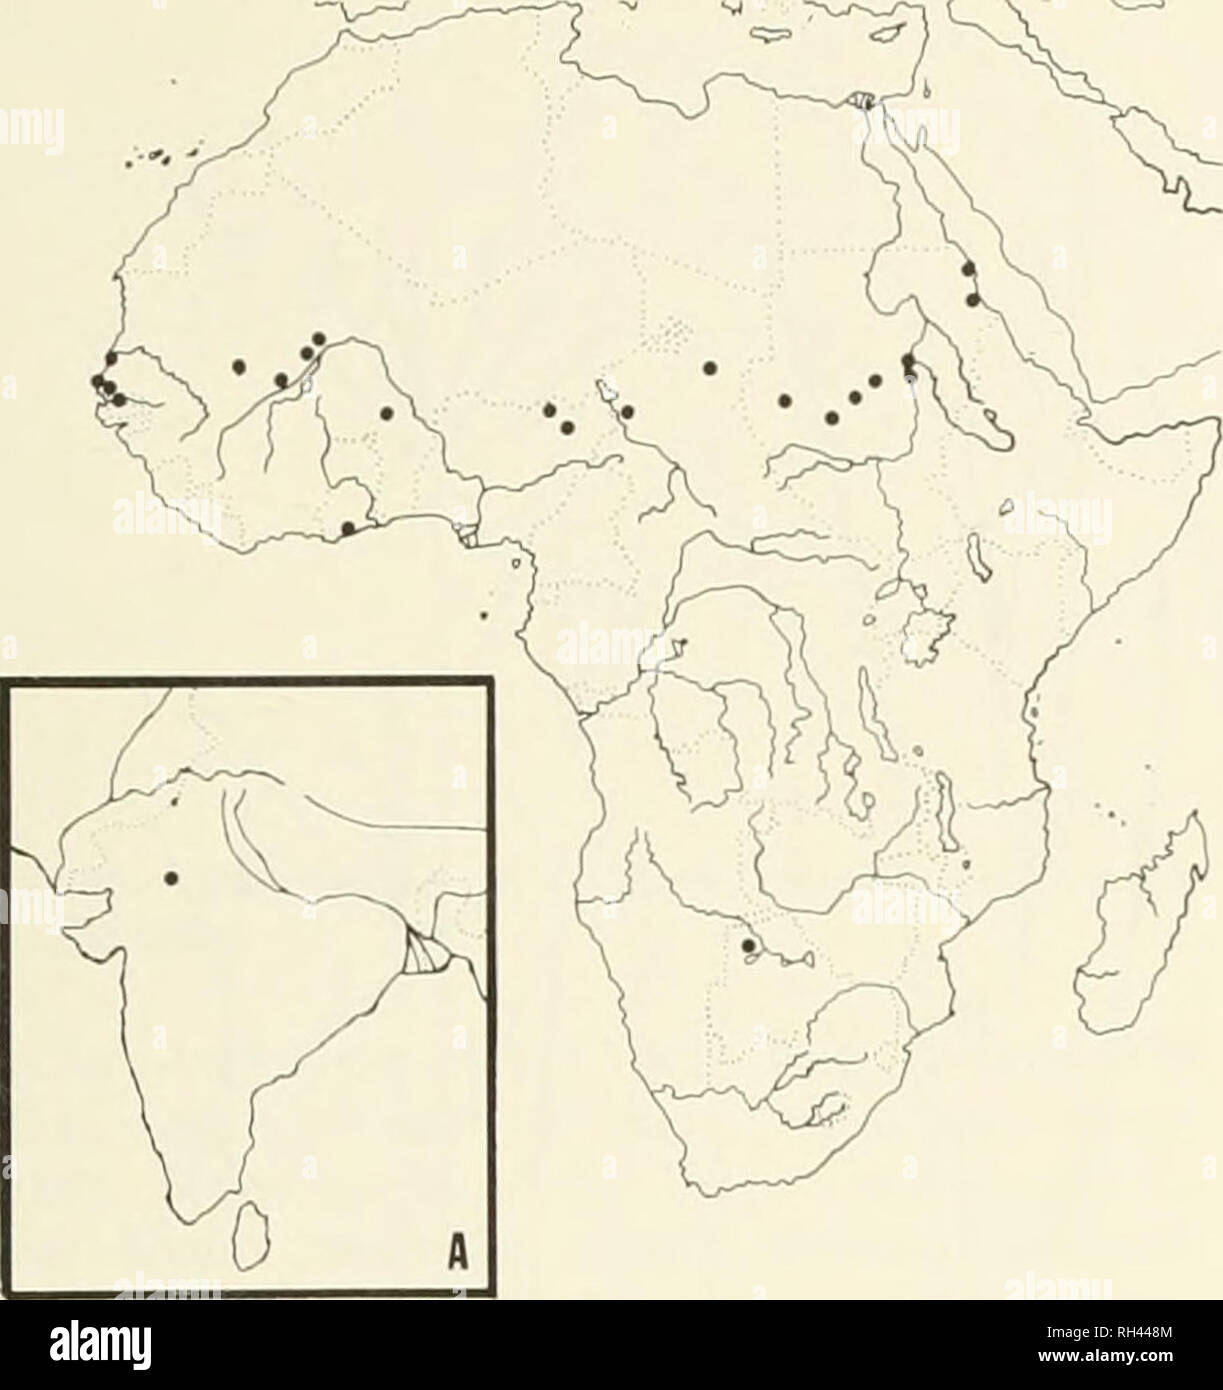 . Brigham Young University science bulletin. Biology -- Periodicals. Biological Series, Vol. 19, No. 2 Taxonomy ok the Genus Chlohis (Gramineae) 43. Fig. 21. Distribution of Chloris prieurii. Inset A: India. INDIA; Rajasthan Prov., Jaipur, Raizada 2/53 (K). MALI: San.sancling, Chevalier 24,958 (P); Nara, Chudeau sm., 26 Aug 1918 (P); Tim- buktu, Hagerup 239 (US). NIGERIA: Bomu Prov., 48 mi N of Damaturu, De Leeuw 1,150 (K). SENEGAL: Kaolack, Berhaut 456 (P); Mbambev, Chevalier 33,795 (P); Pointe Louis, Roberfi/'149.16.2 (K). SUDAN: Blue Nile Prov., Bagein, 50 mi S of Khartoum, Jackson 2,336 (K Stock Photo